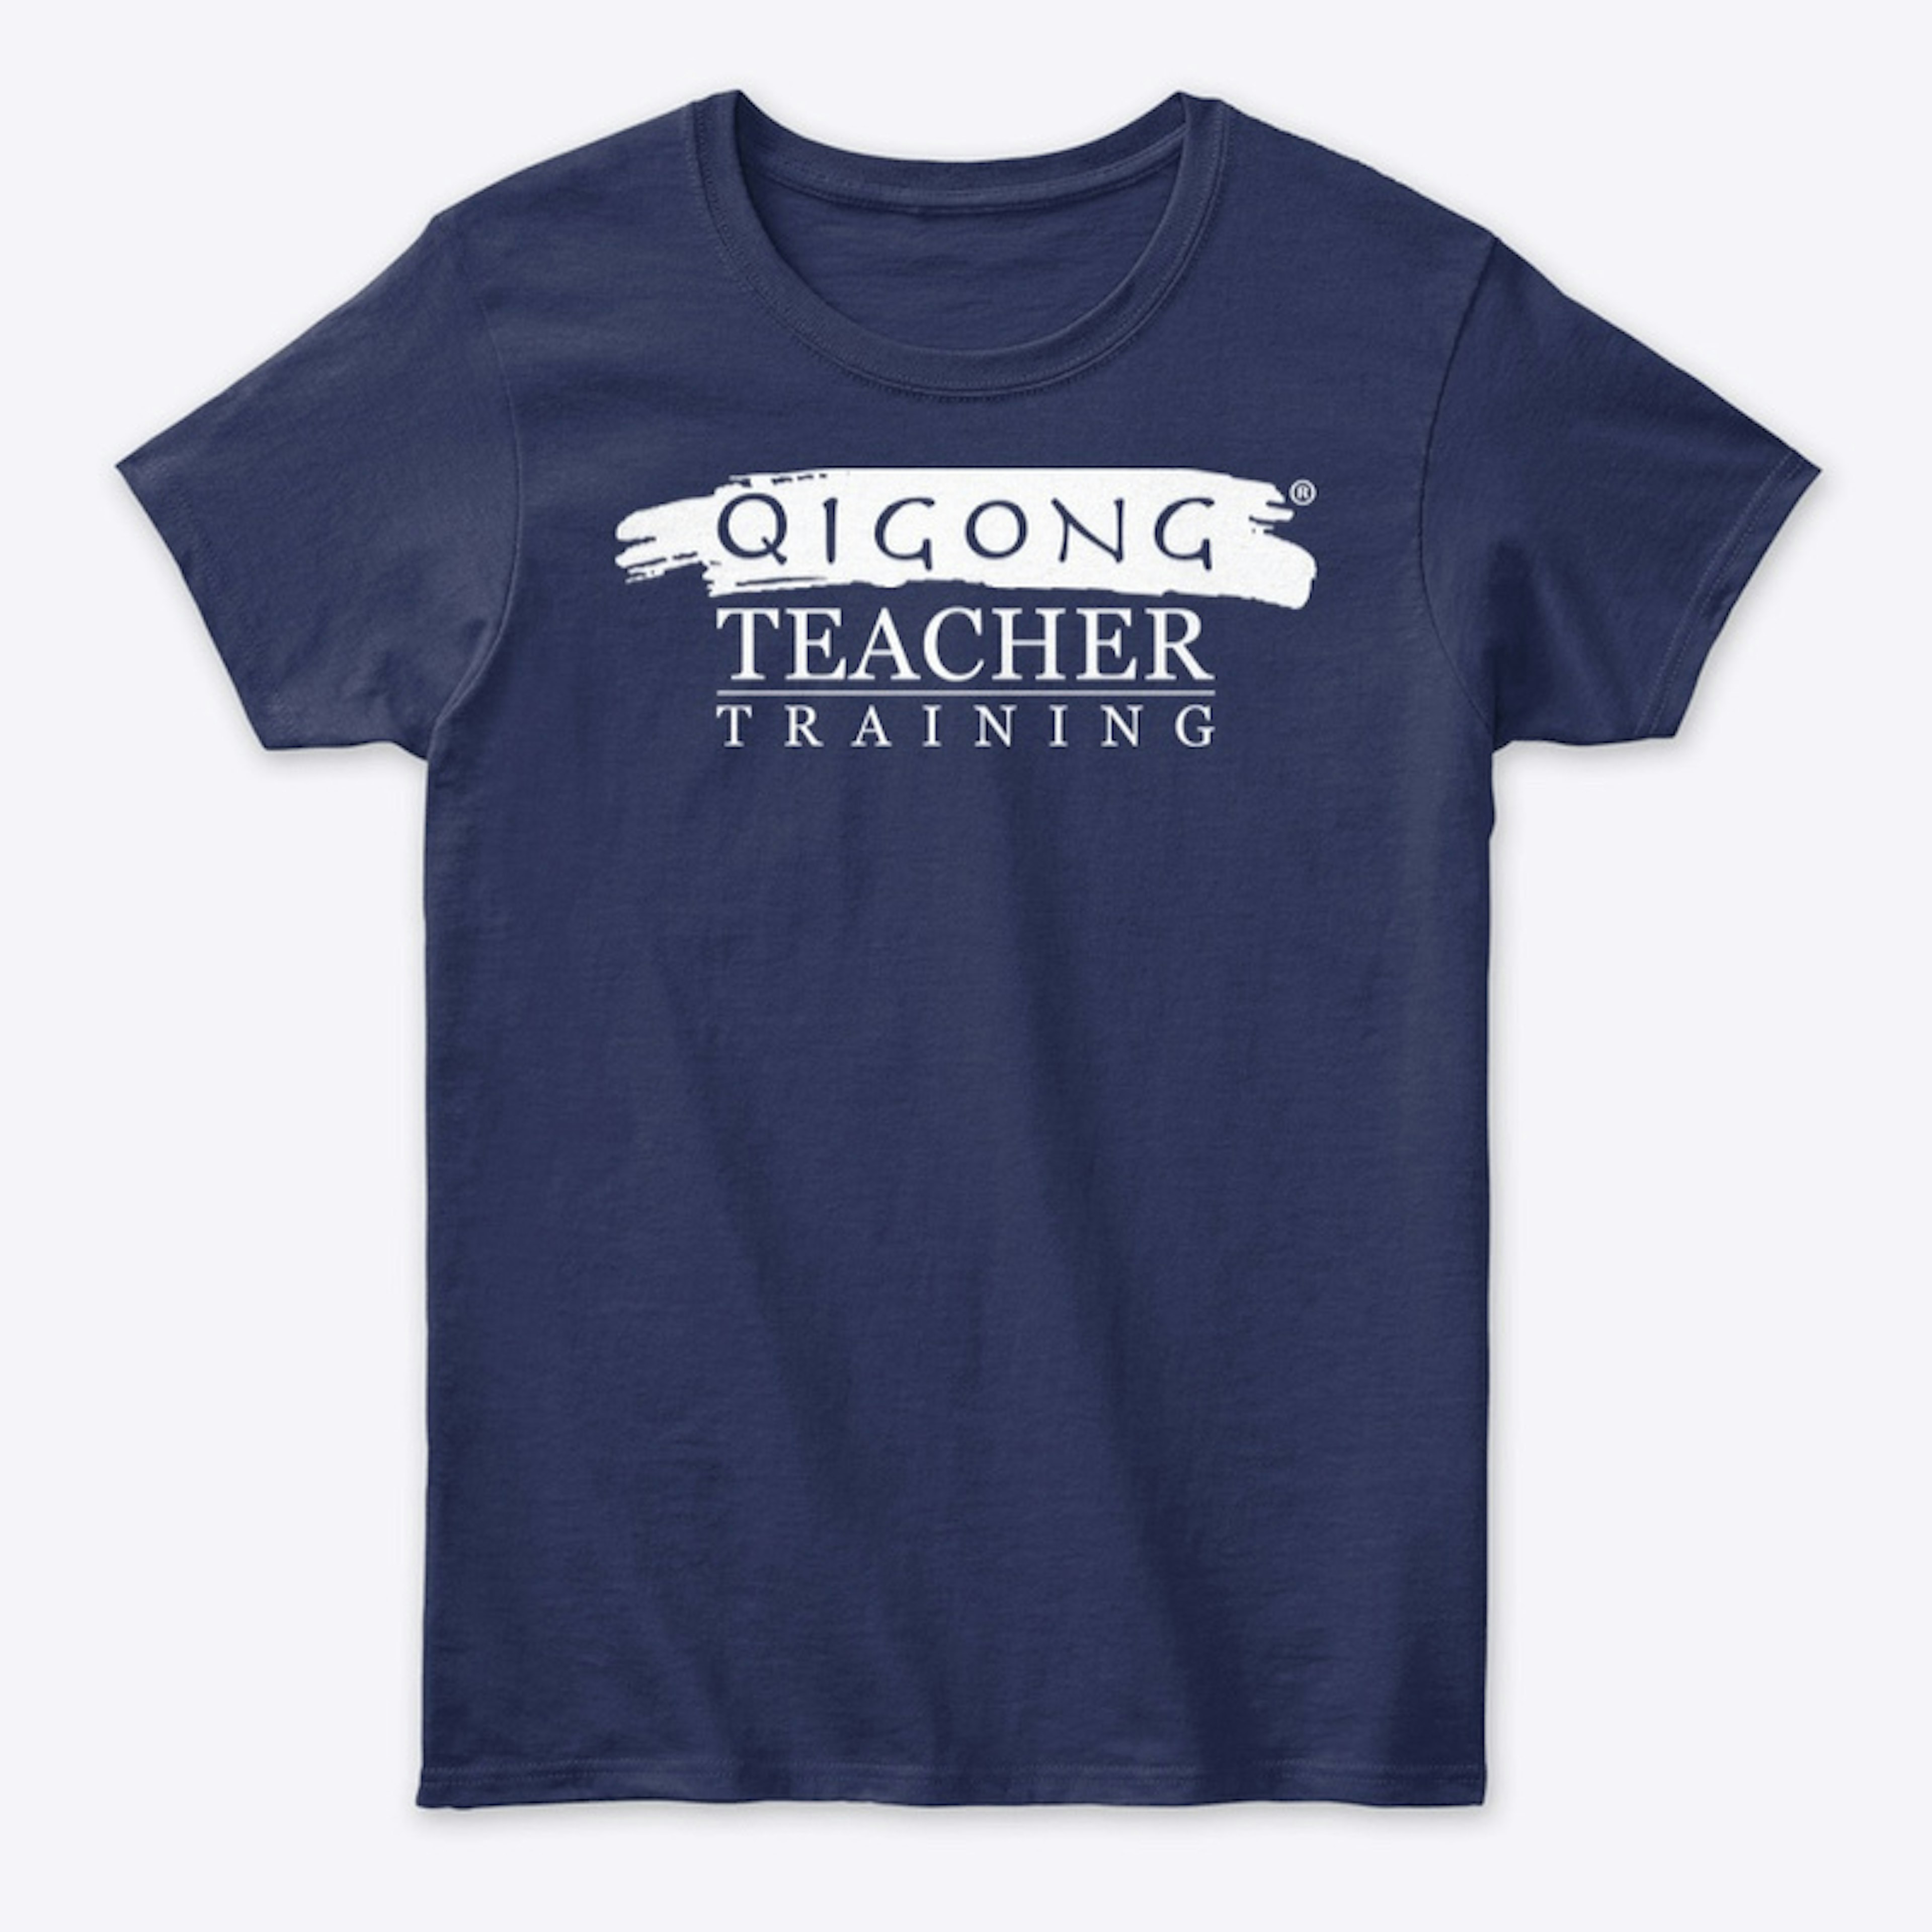 Qigong Teacher Training 